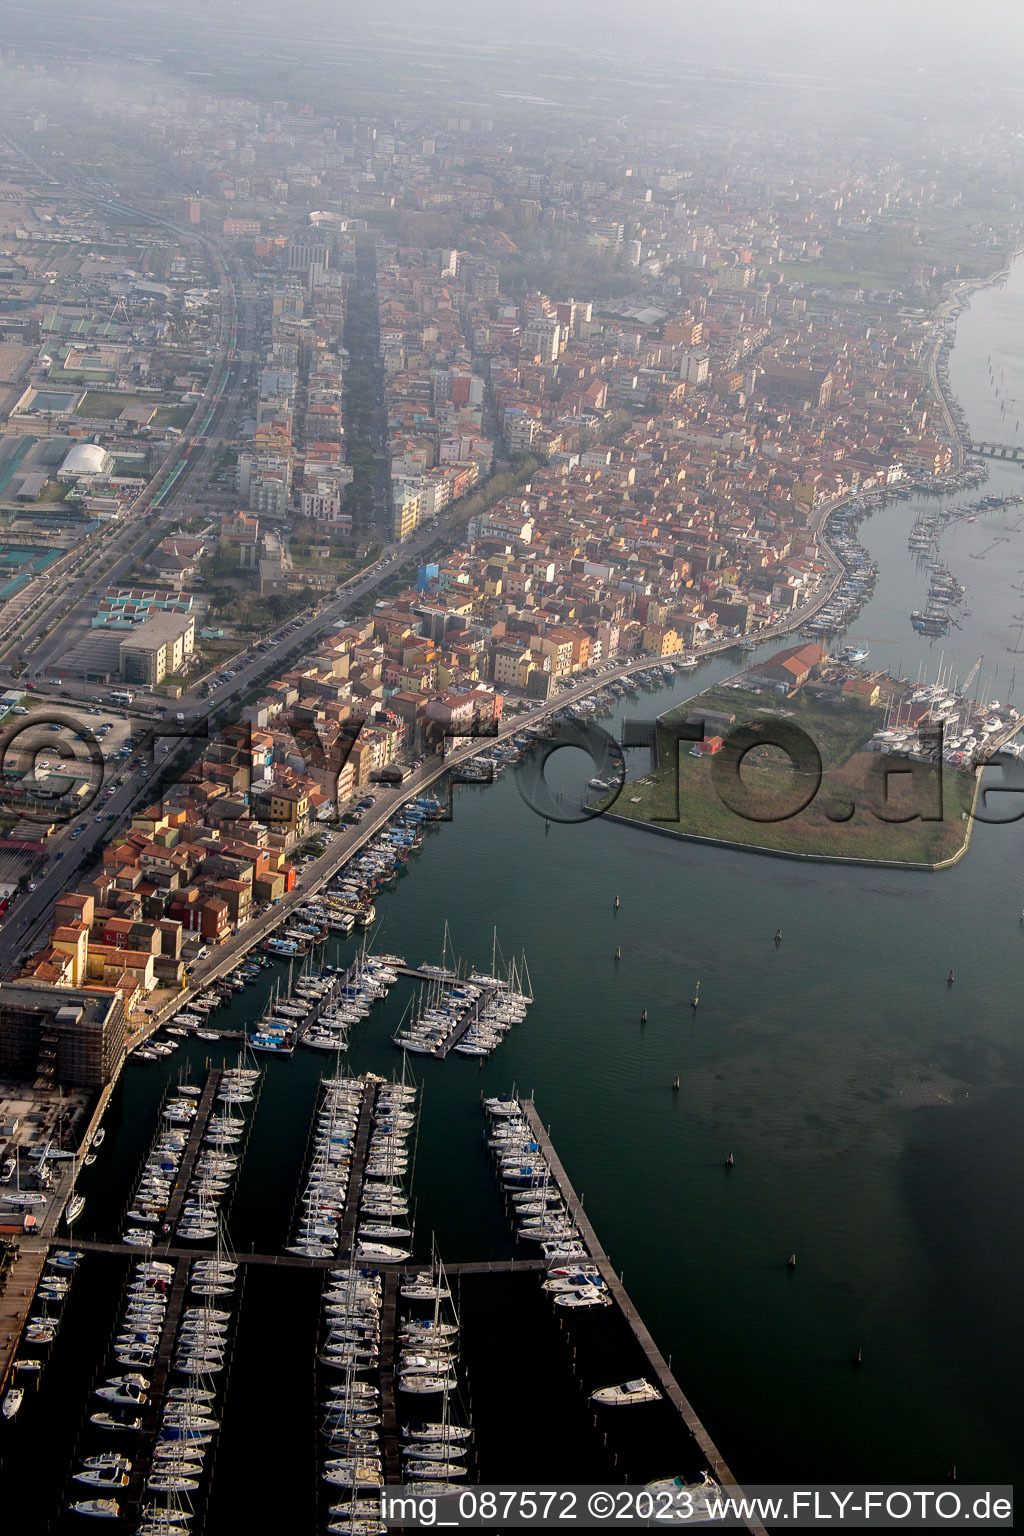 Drone image of Sottomarina in Faro in the state Veneto, Italy